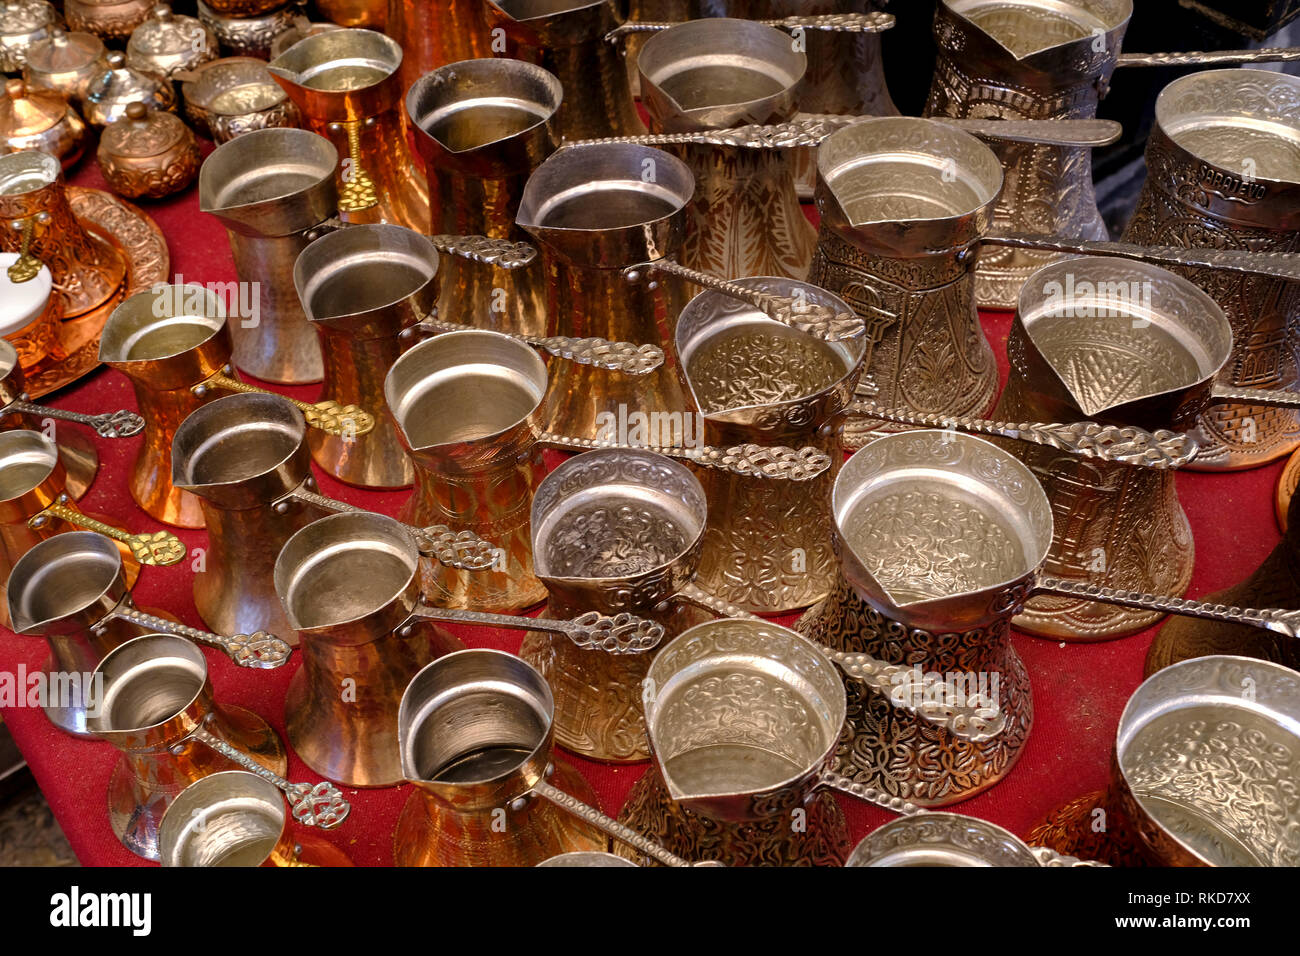 Dzezva (Bosnian coffee pots) on display at the Bascarsija bazaar in Sarajevo, Bosnia and Herzegovina. Stock Photo